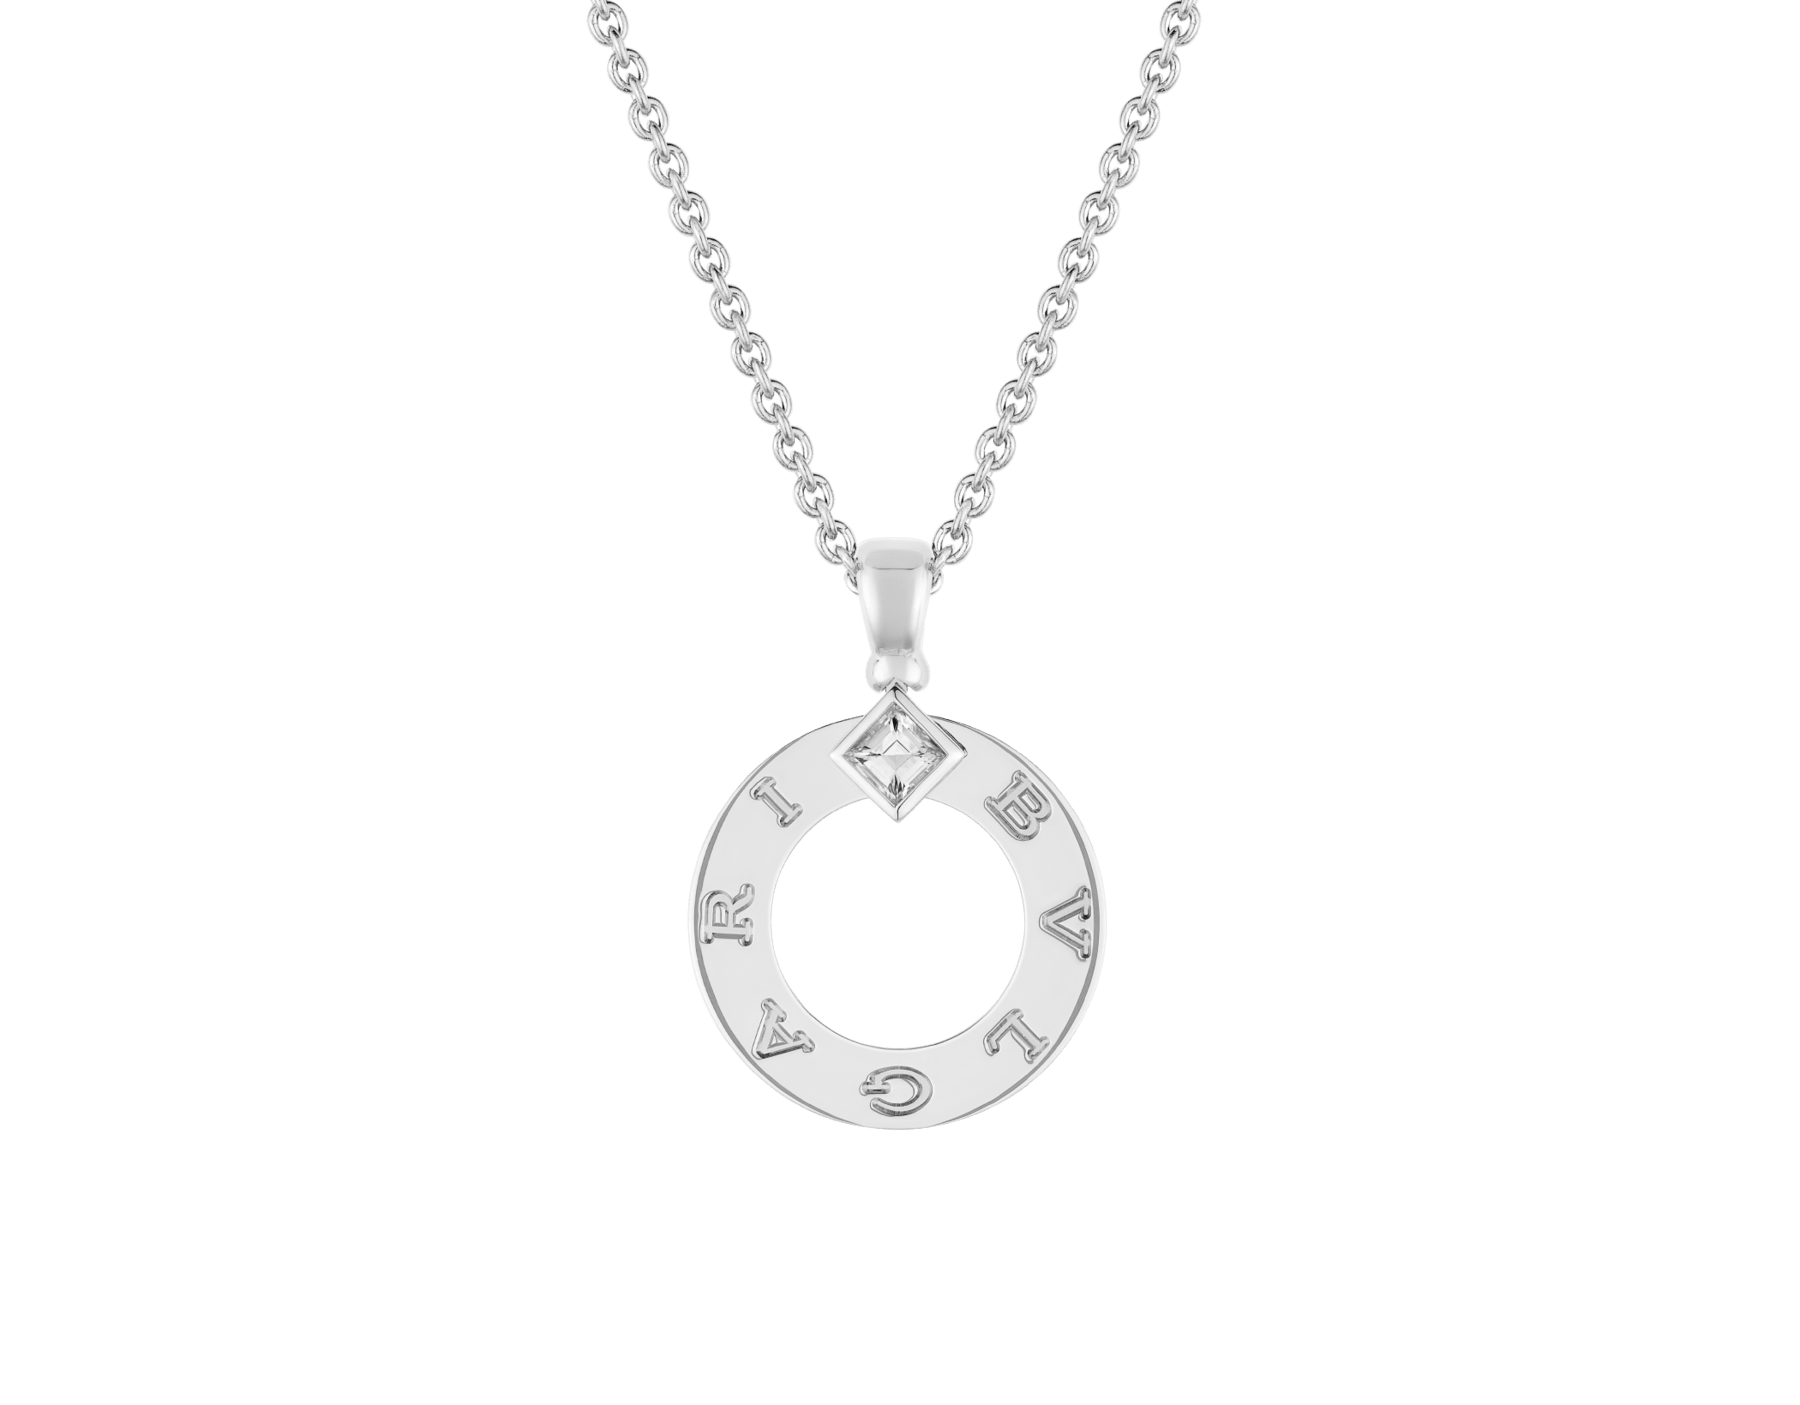 BVLGARI BVLGARI 18 kt white gold pendant necklace set with a diamond 361076 image 1